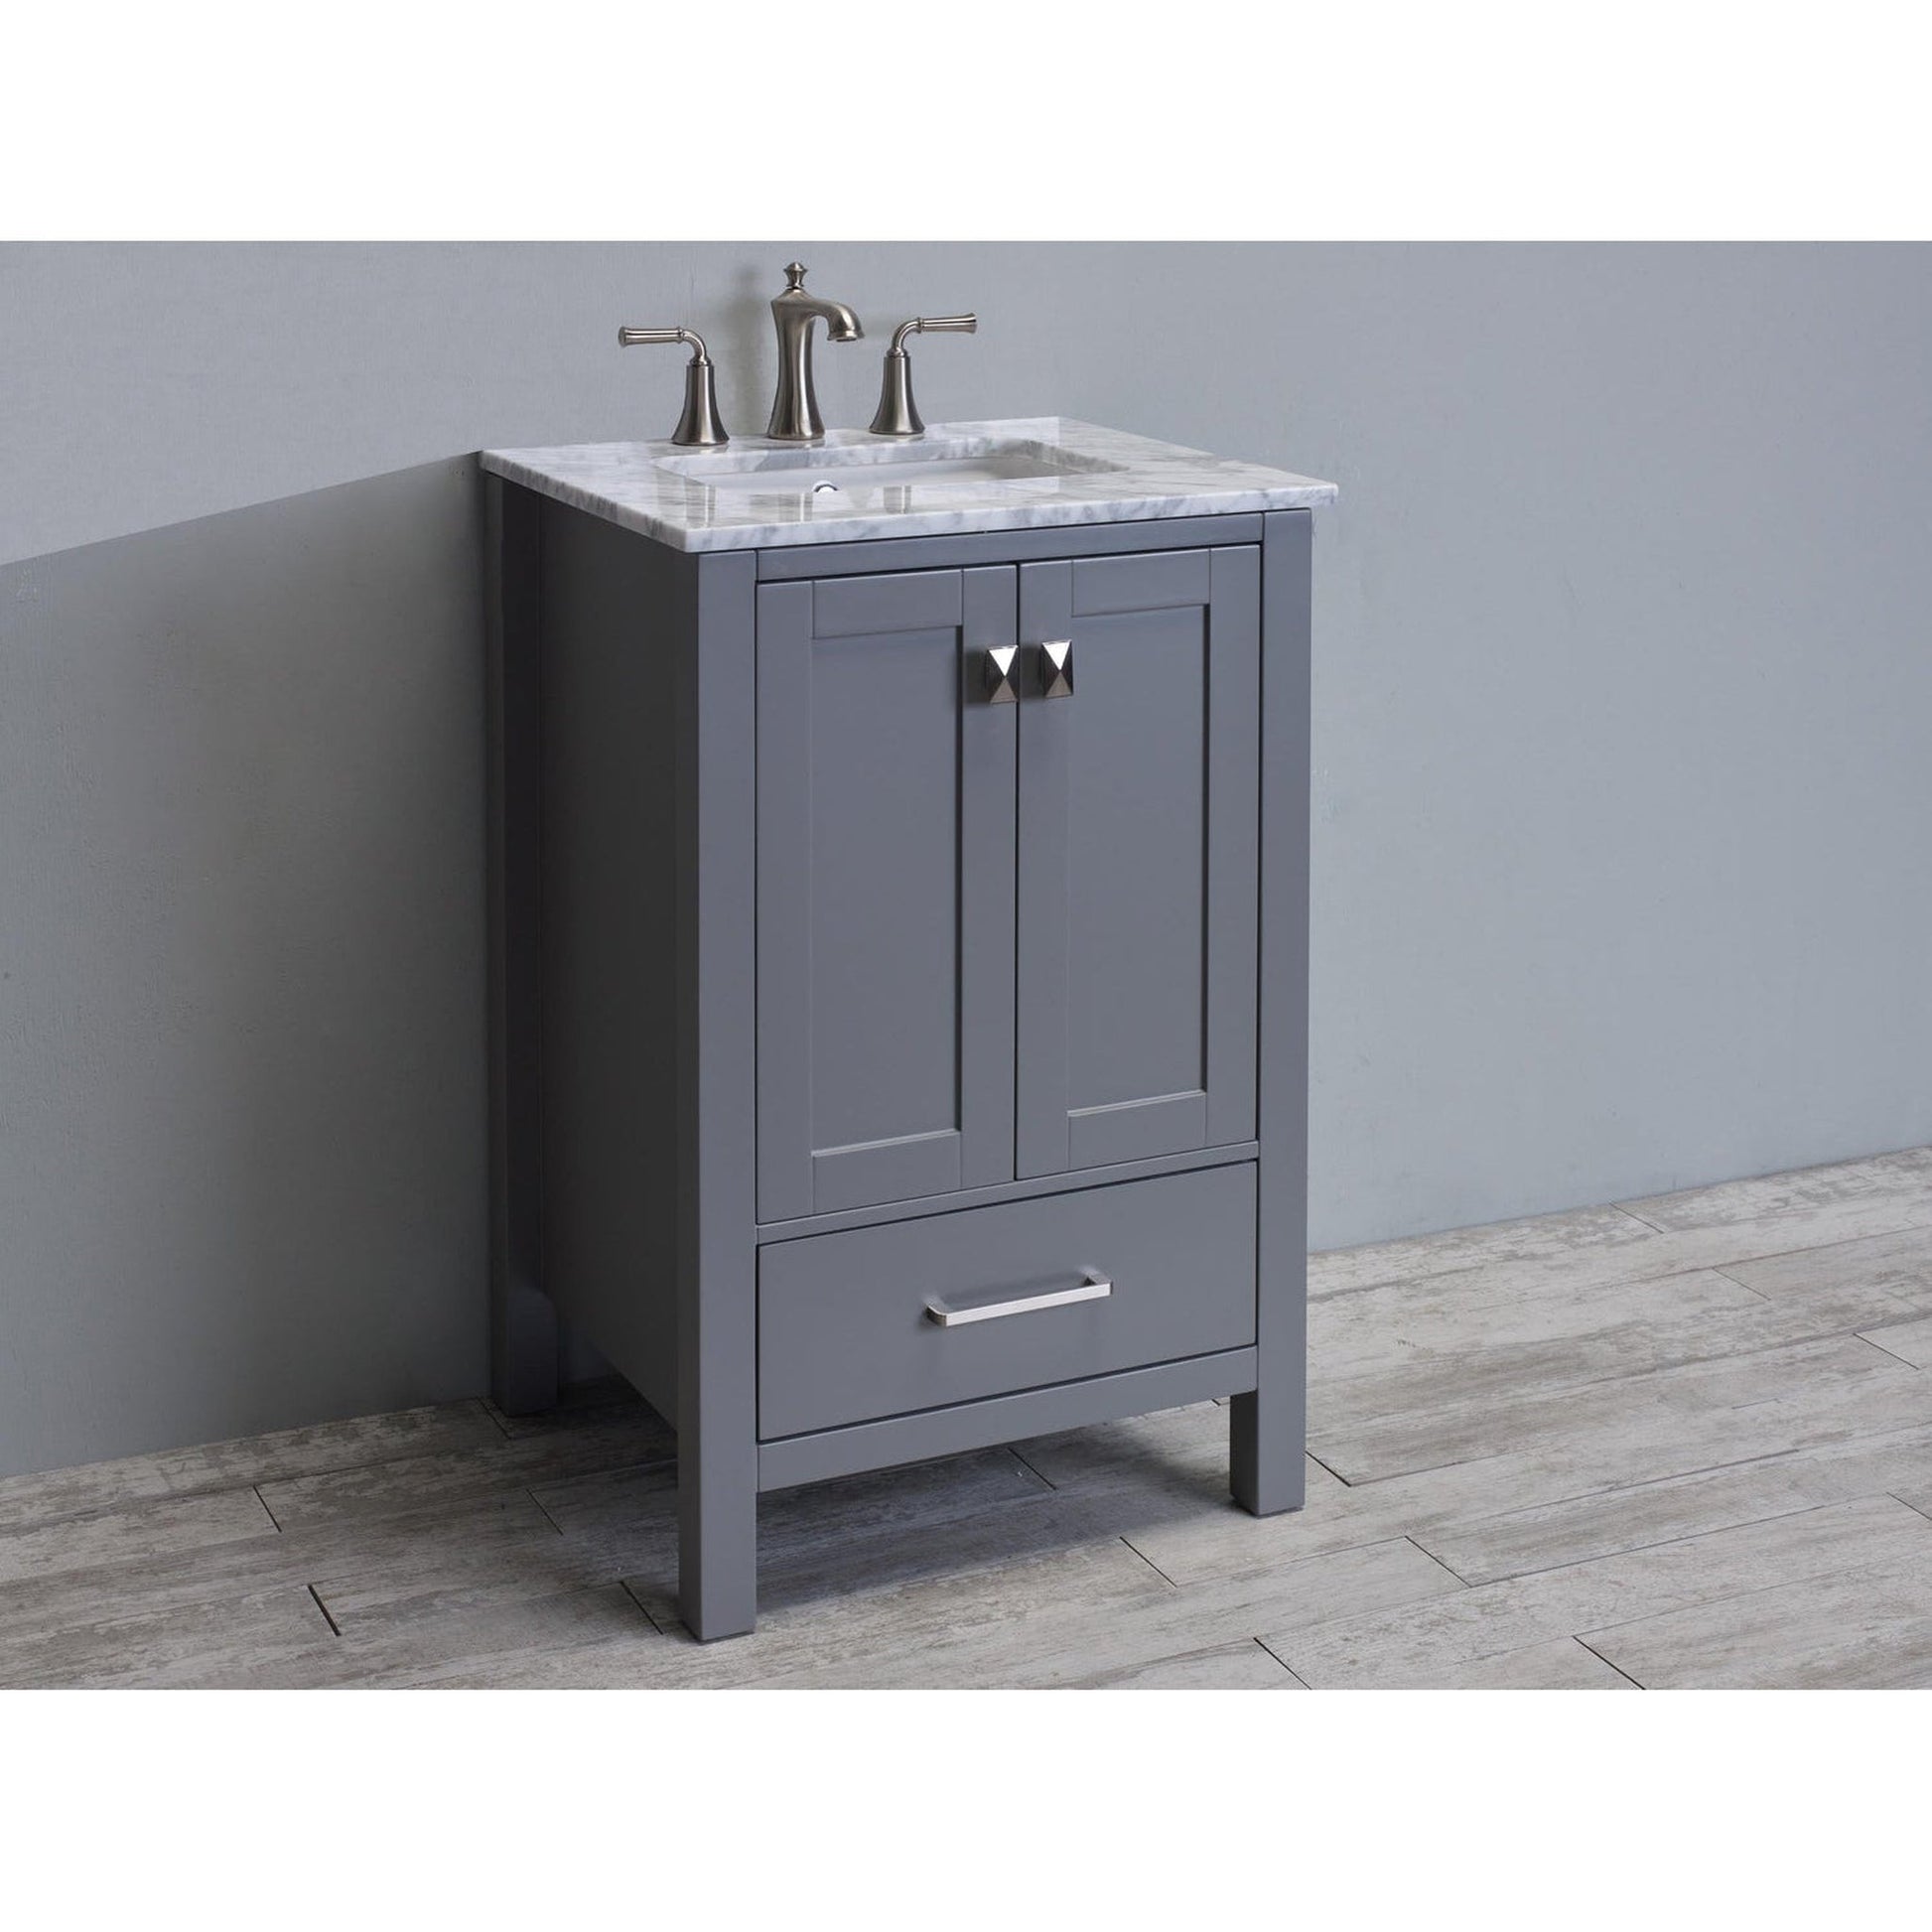 Eviva Aberdeen 24" x 34" Gray Freestanding Bathroom Vanity With Single Undermount Sink